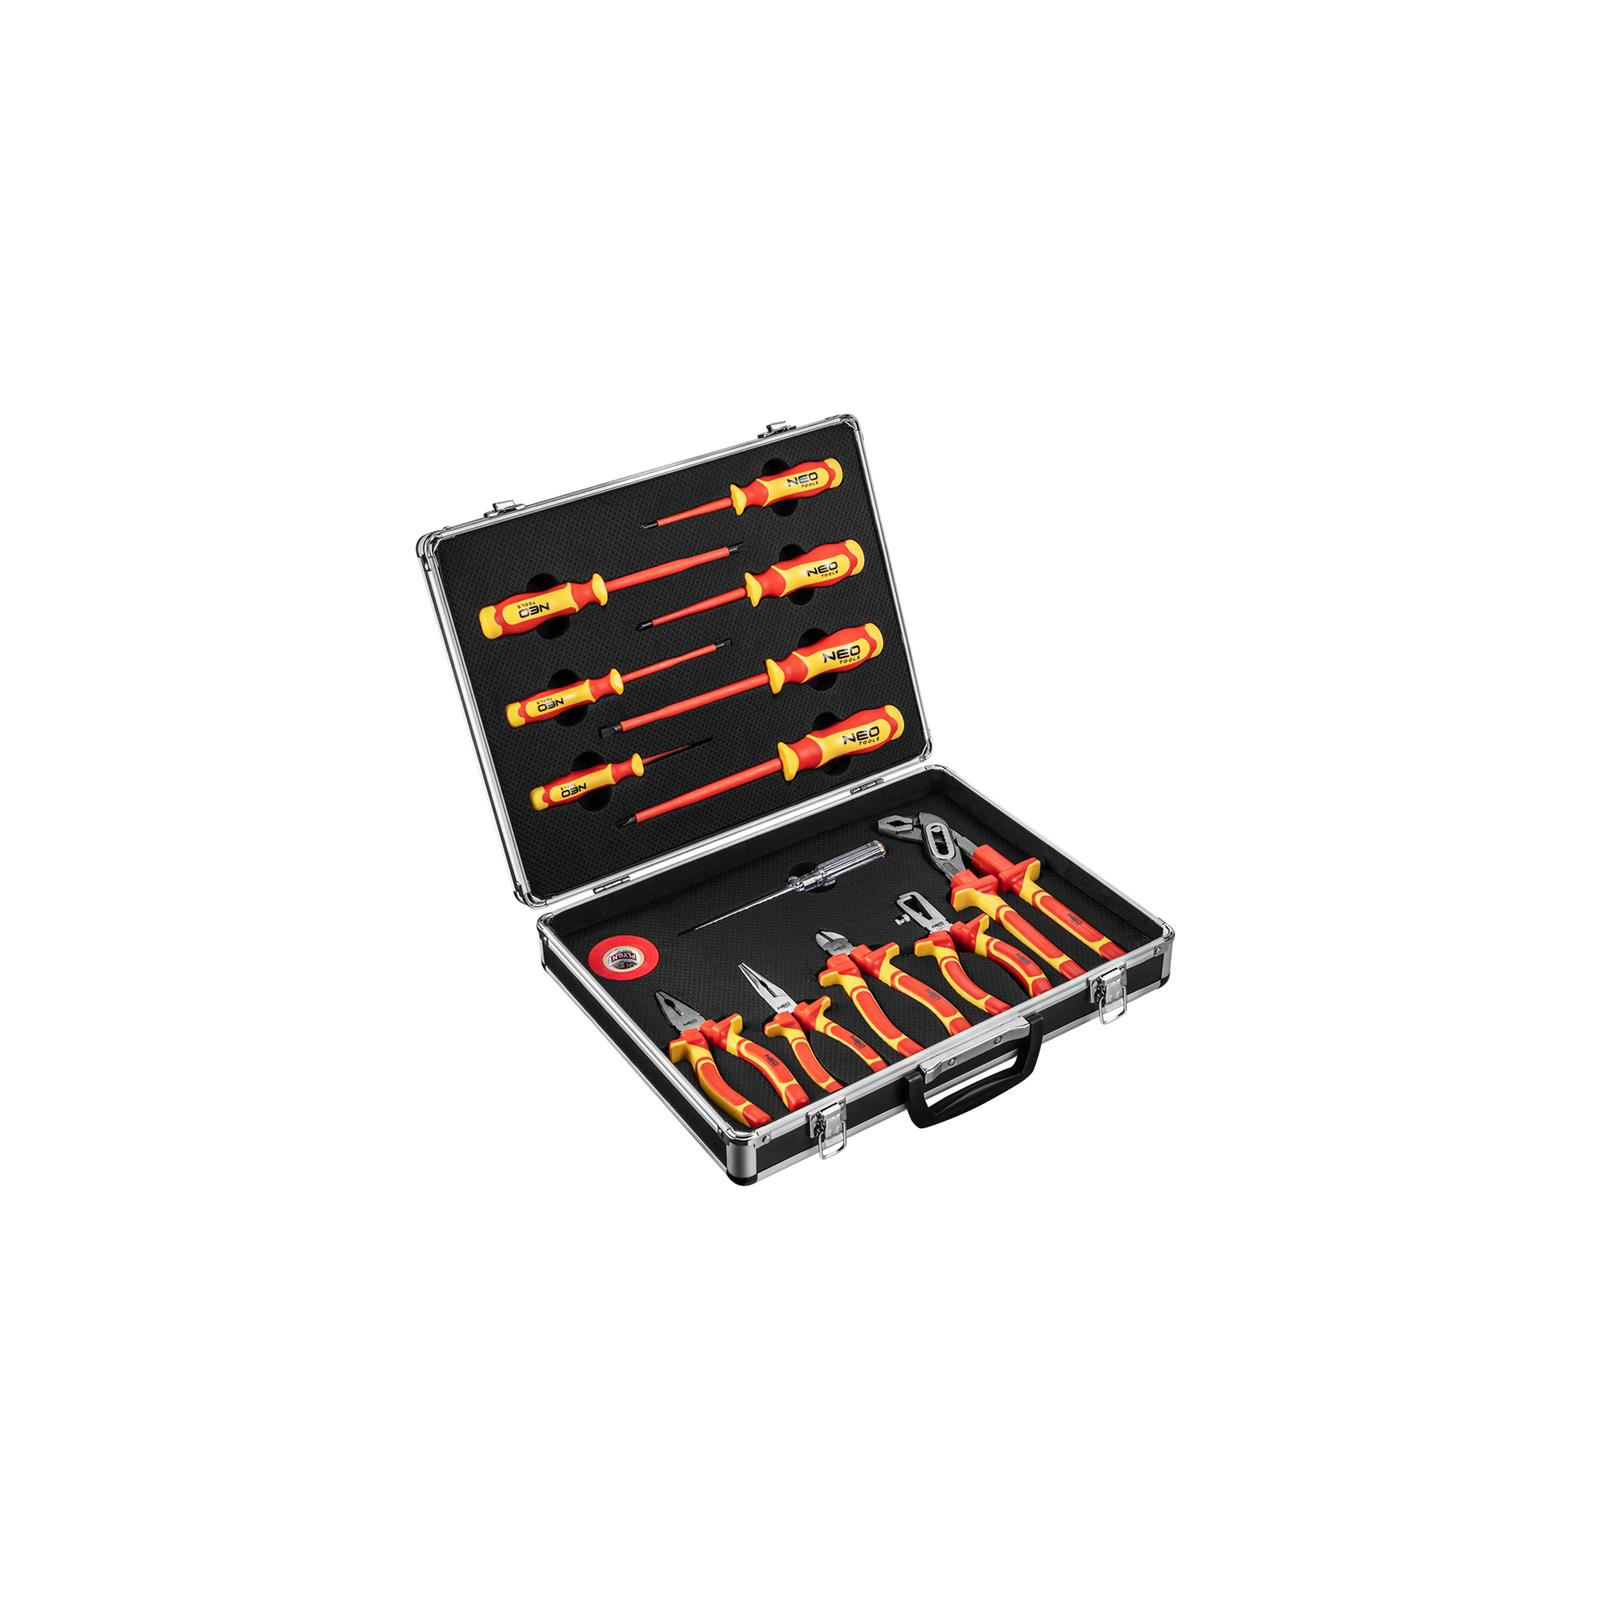 Набір інструментів Neo Tools для работы с электричеством, 1000 В, 13 шт. (01-234)